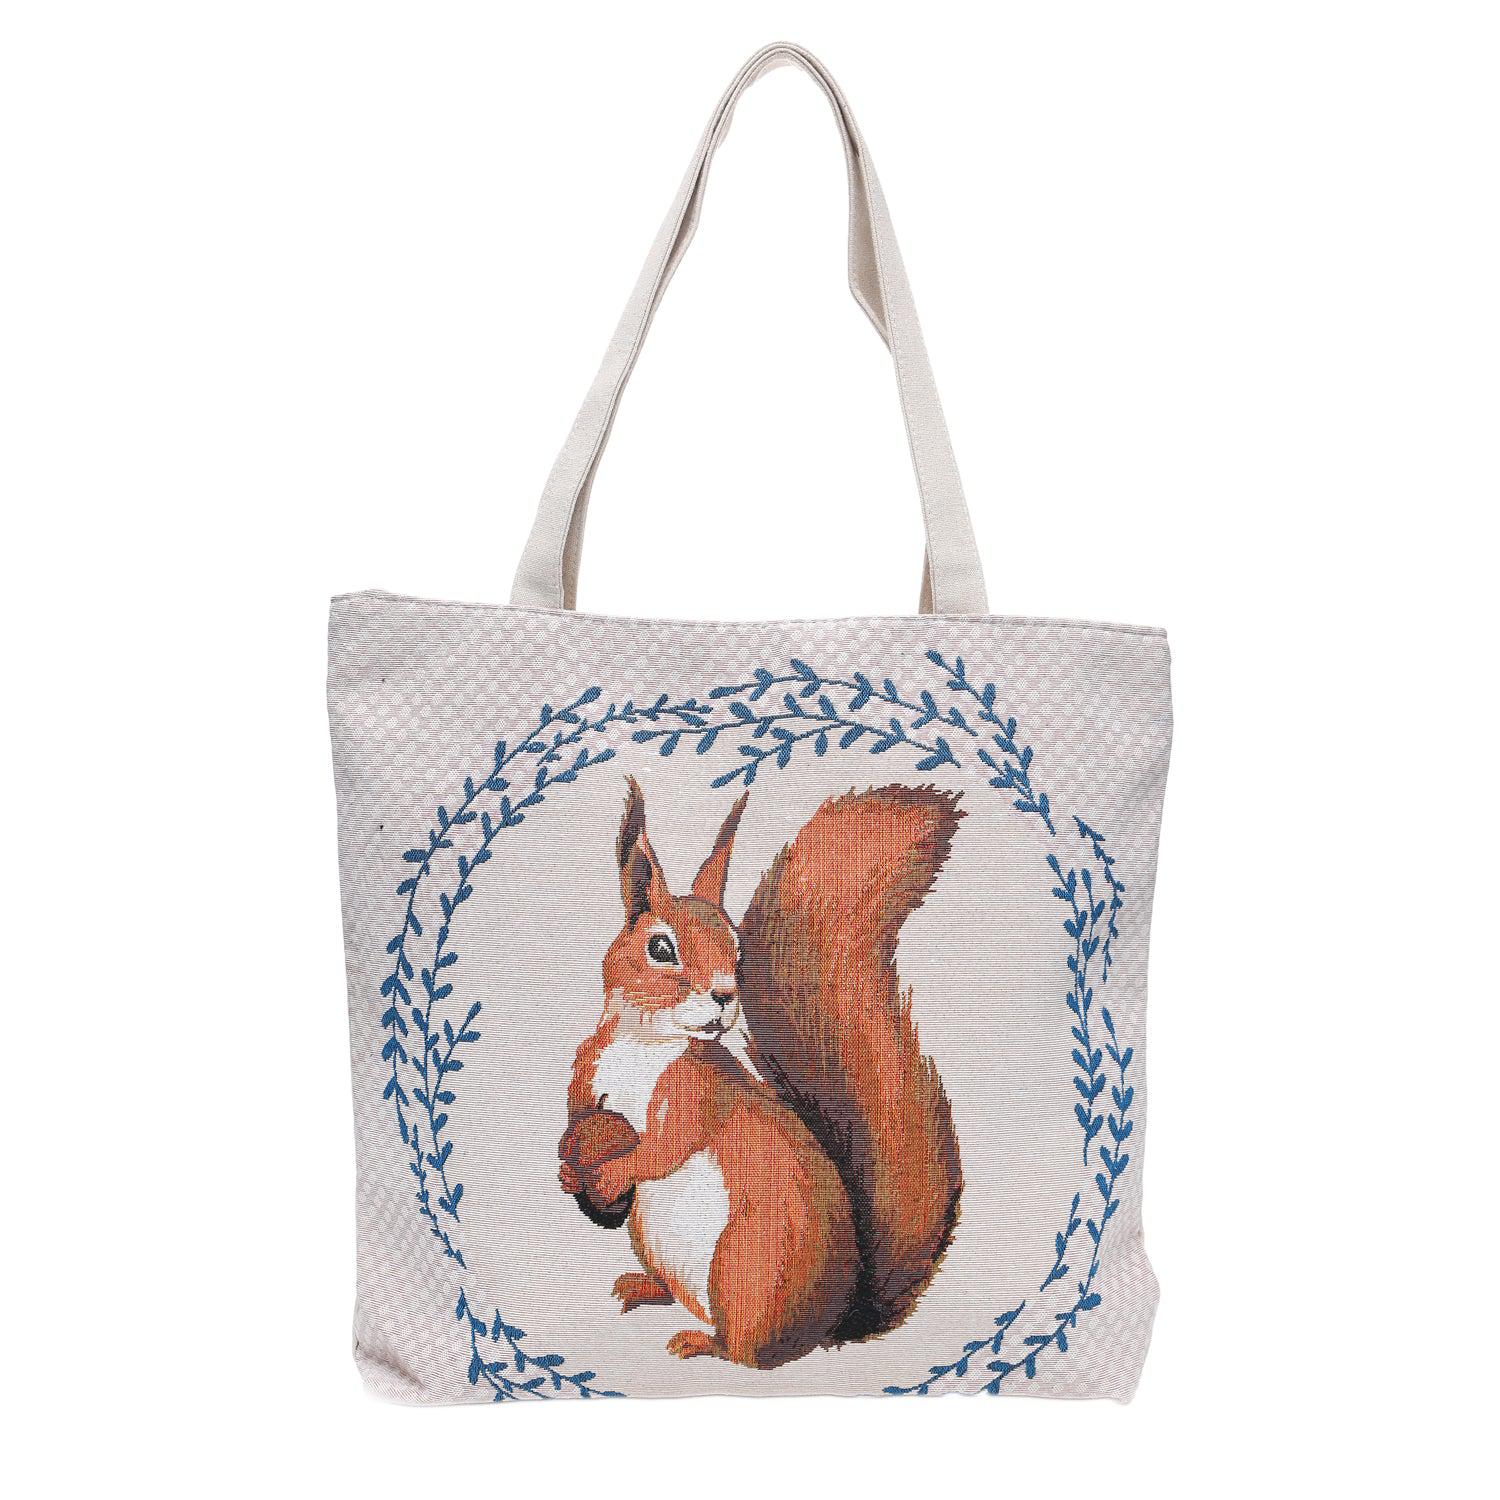 Empire Cove Squirrel Print Cotton Canvas Tote Bags Reusable Beach Shopping